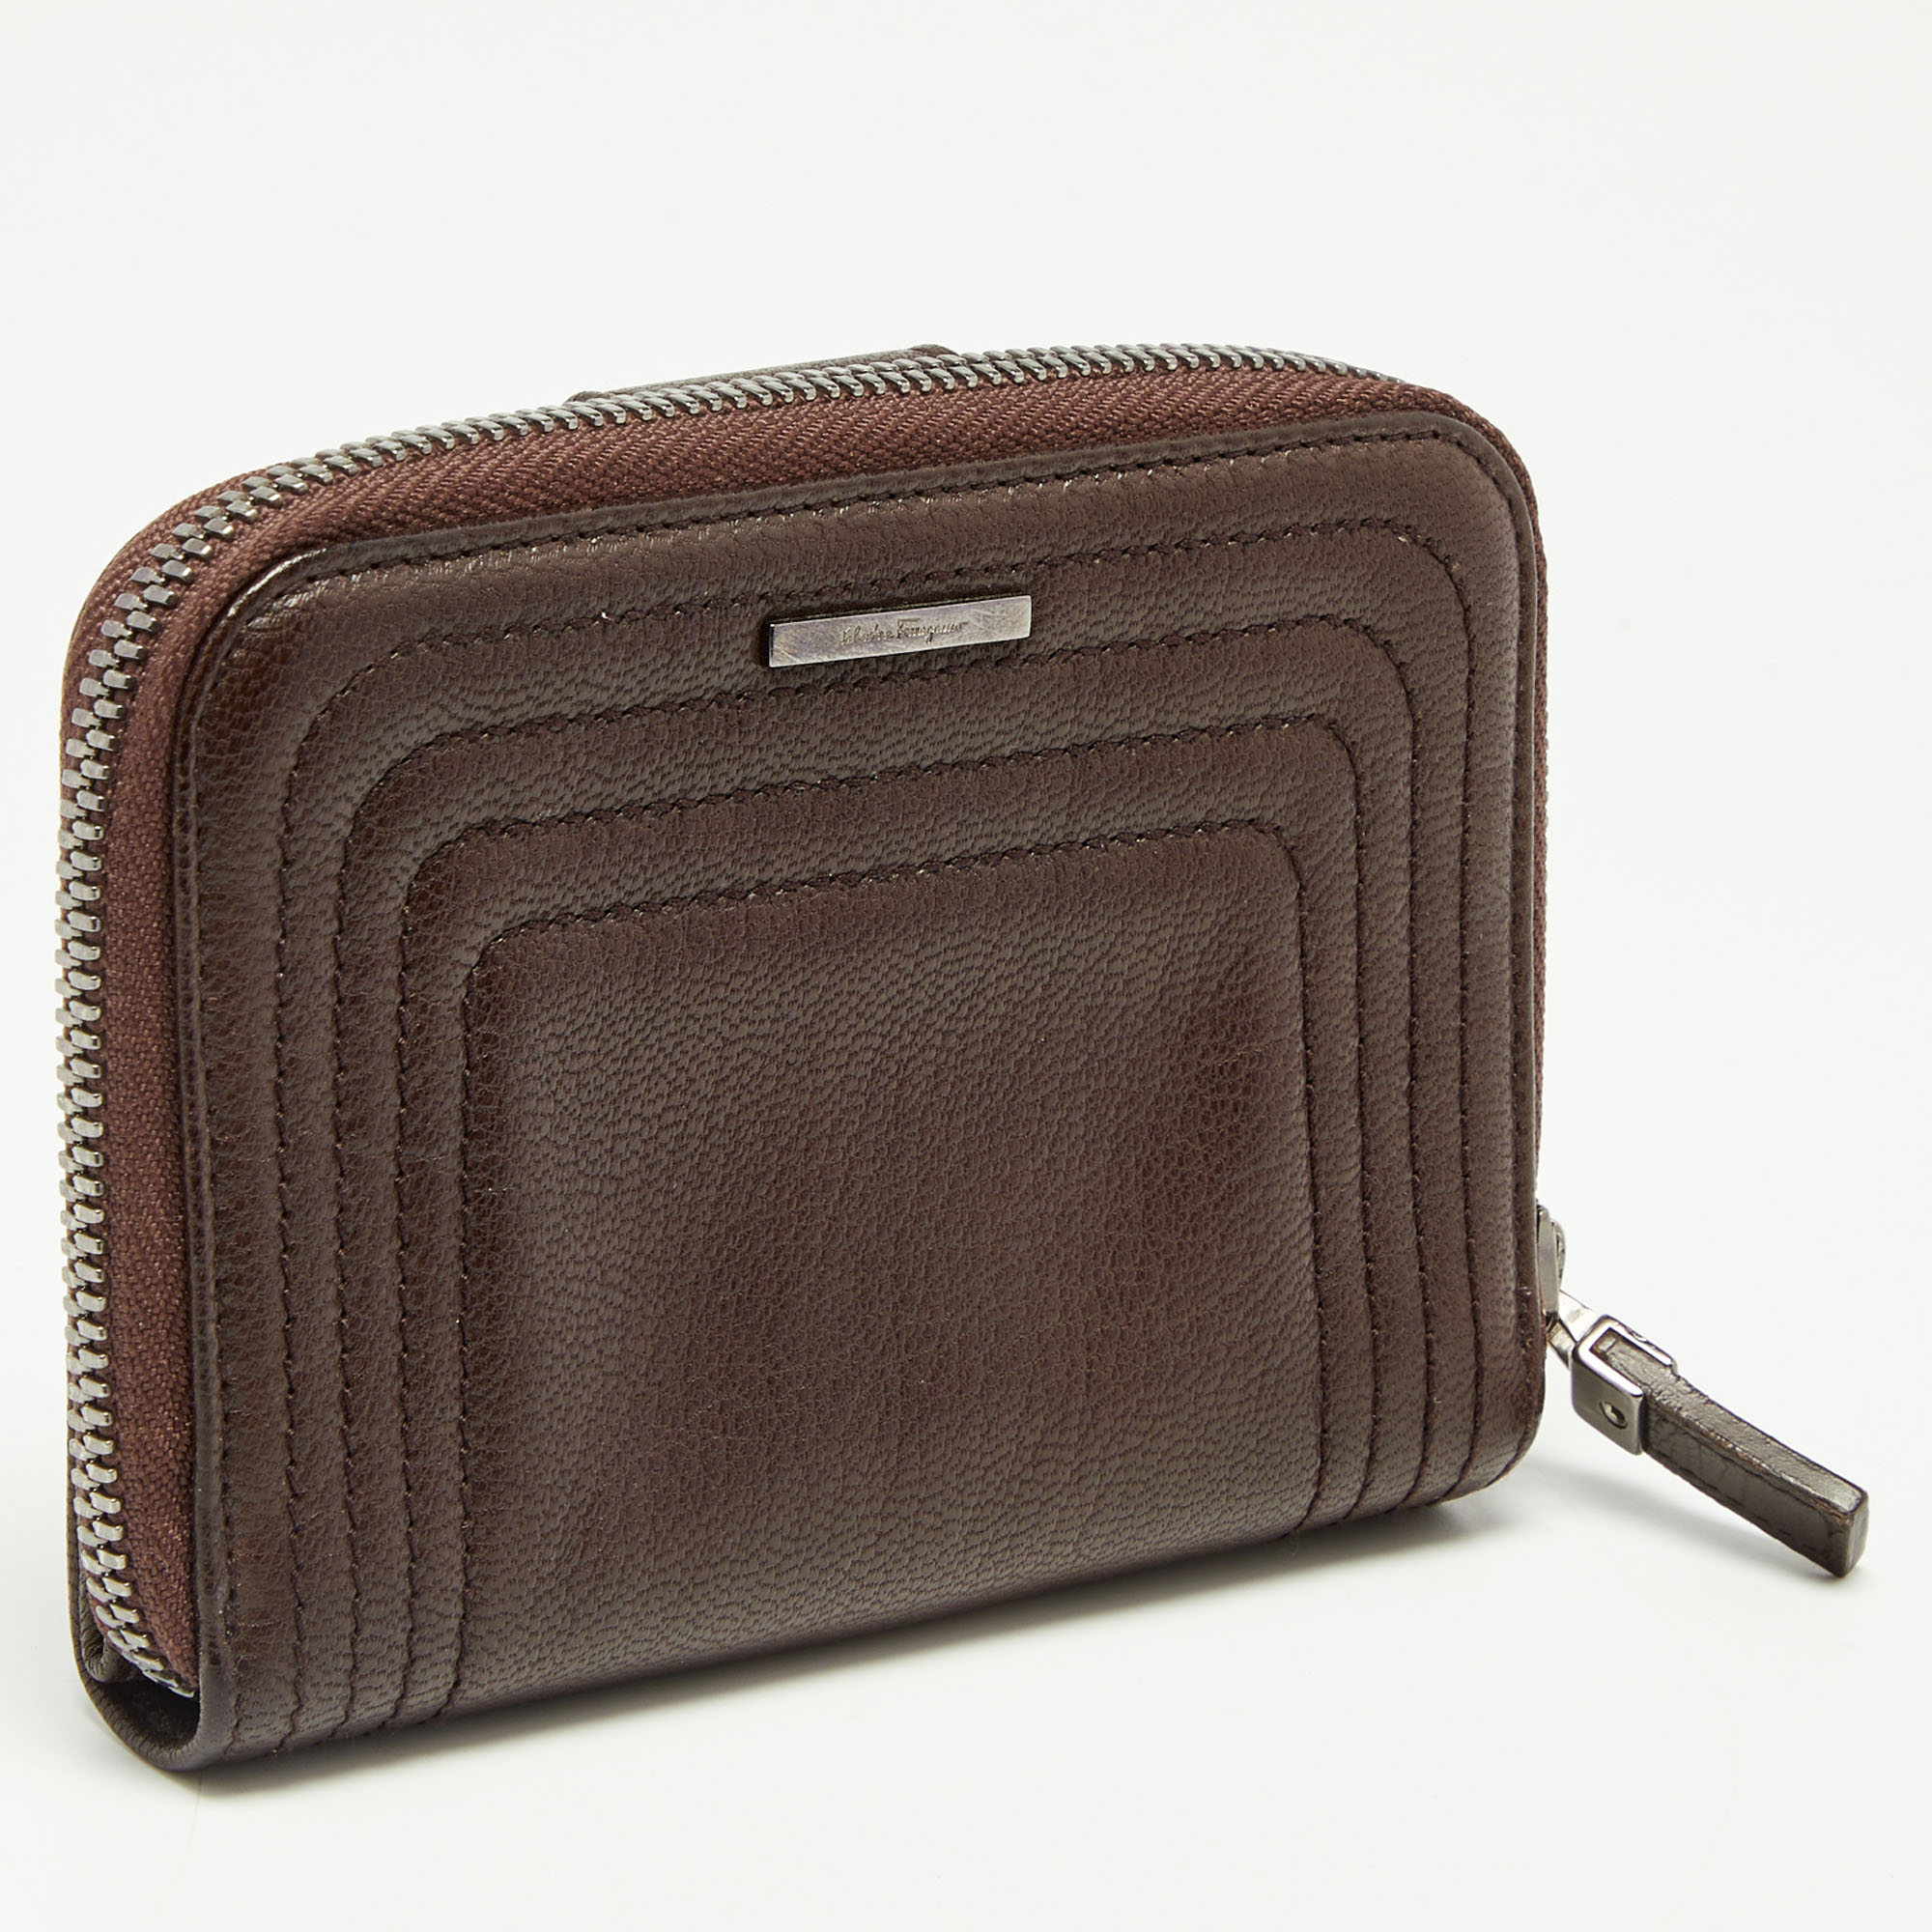 Salvatore Ferragamo Dark Brown Leather Zip Around Compact Wallet